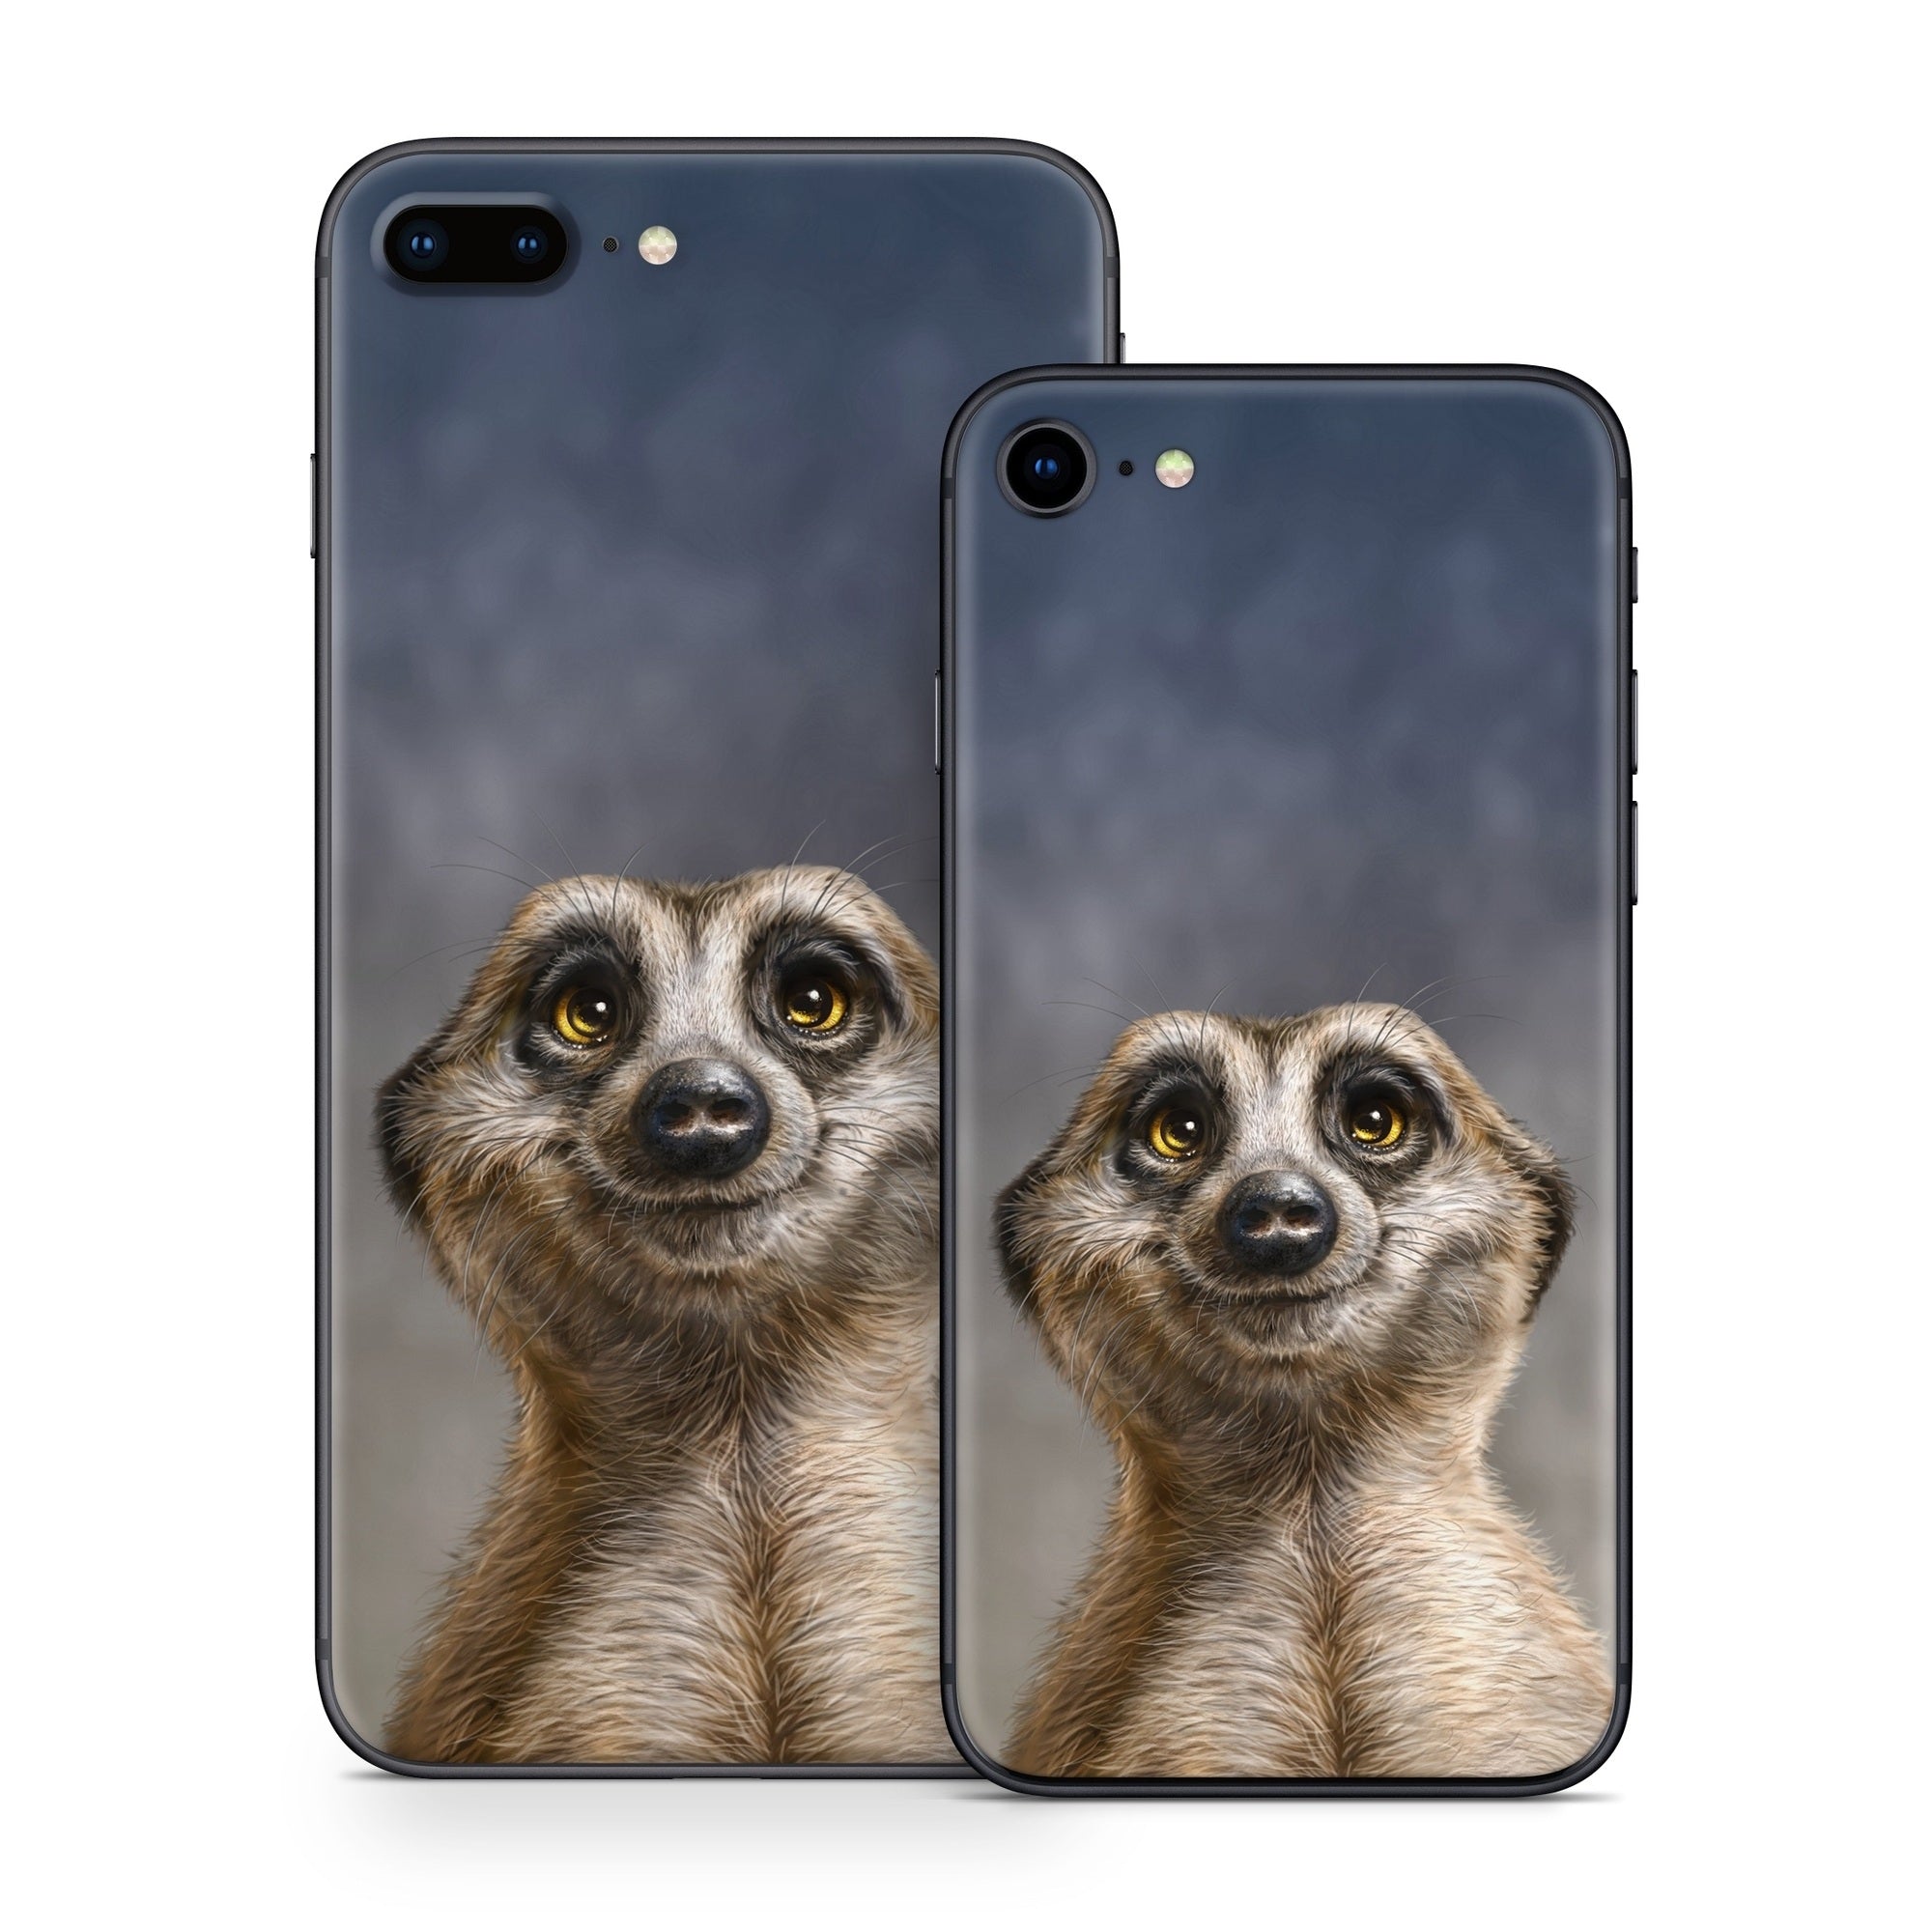 Meerkat - Apple iPhone 8 Skin